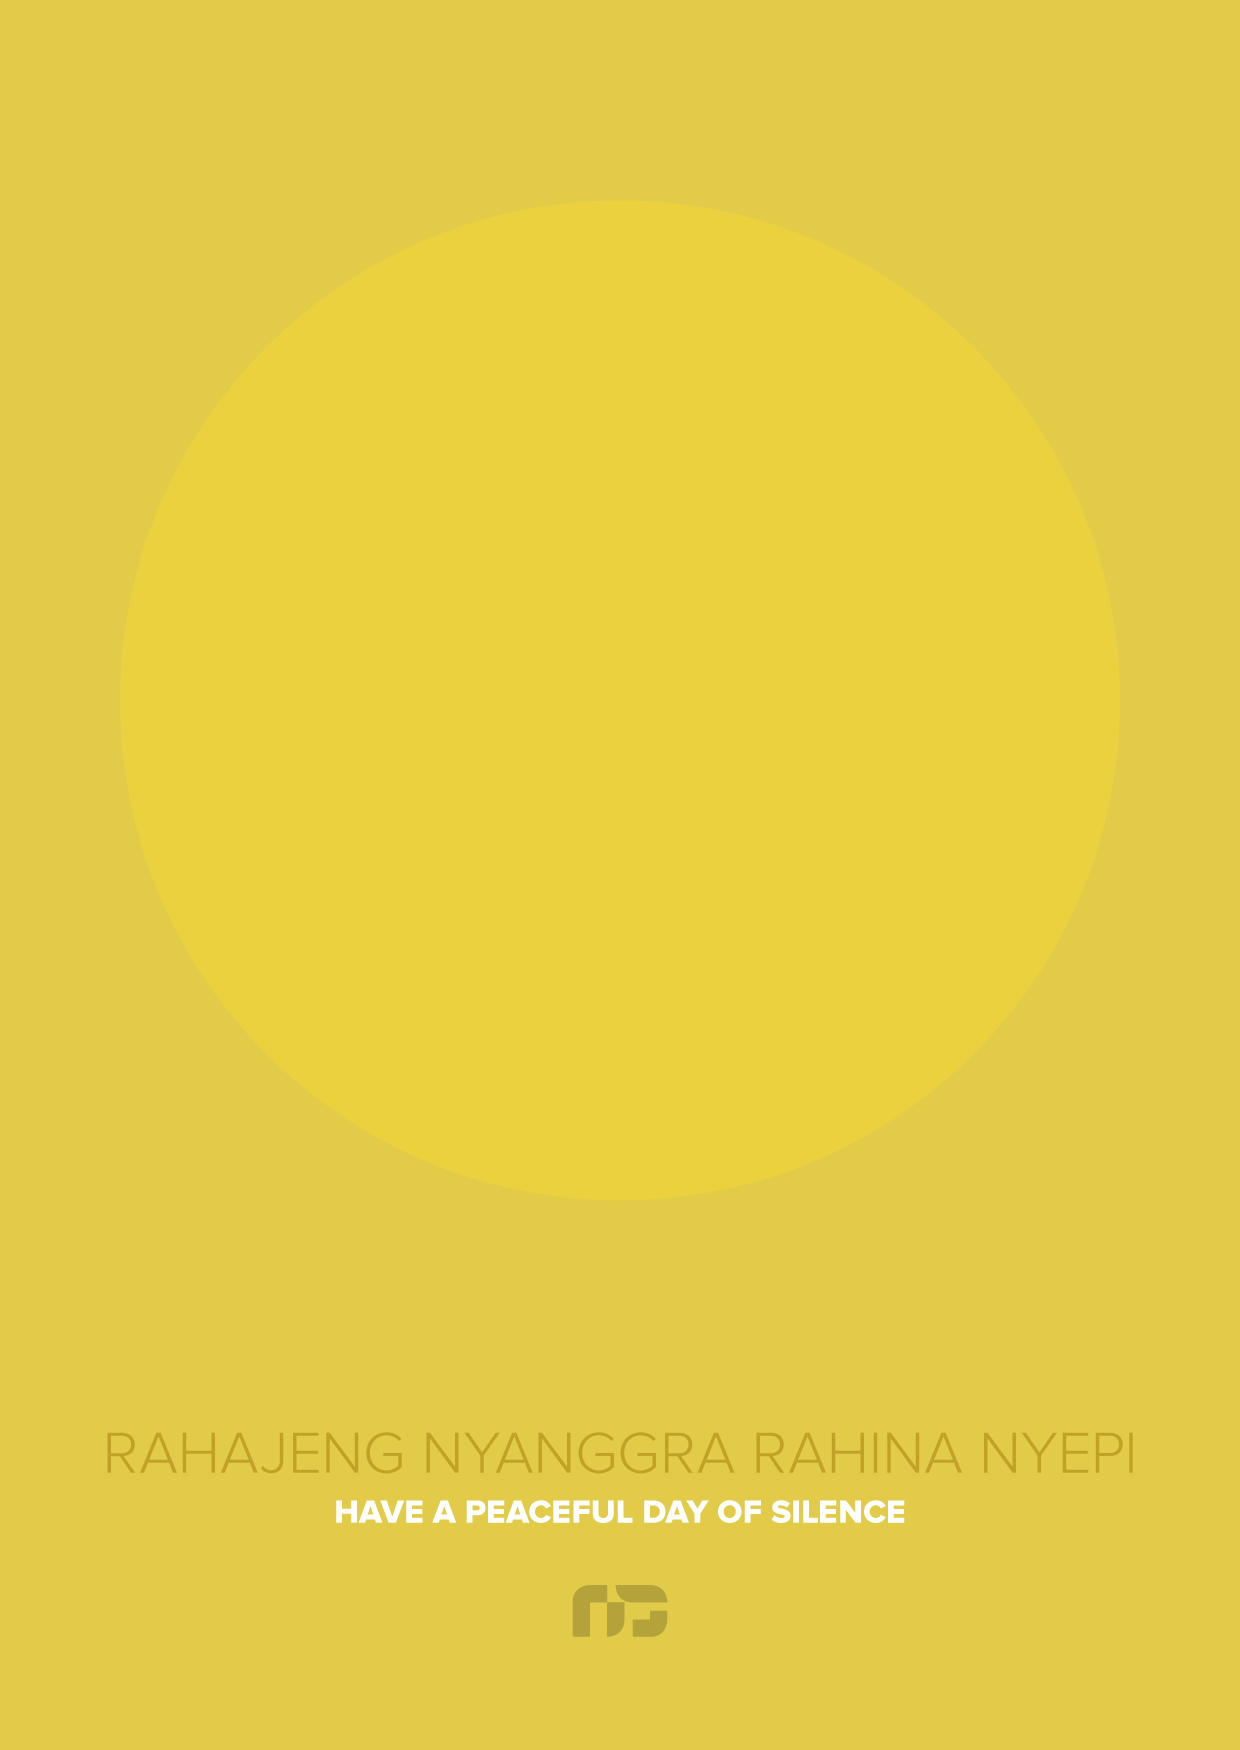 Rahajeng Nyanggra Rahina Nyepi